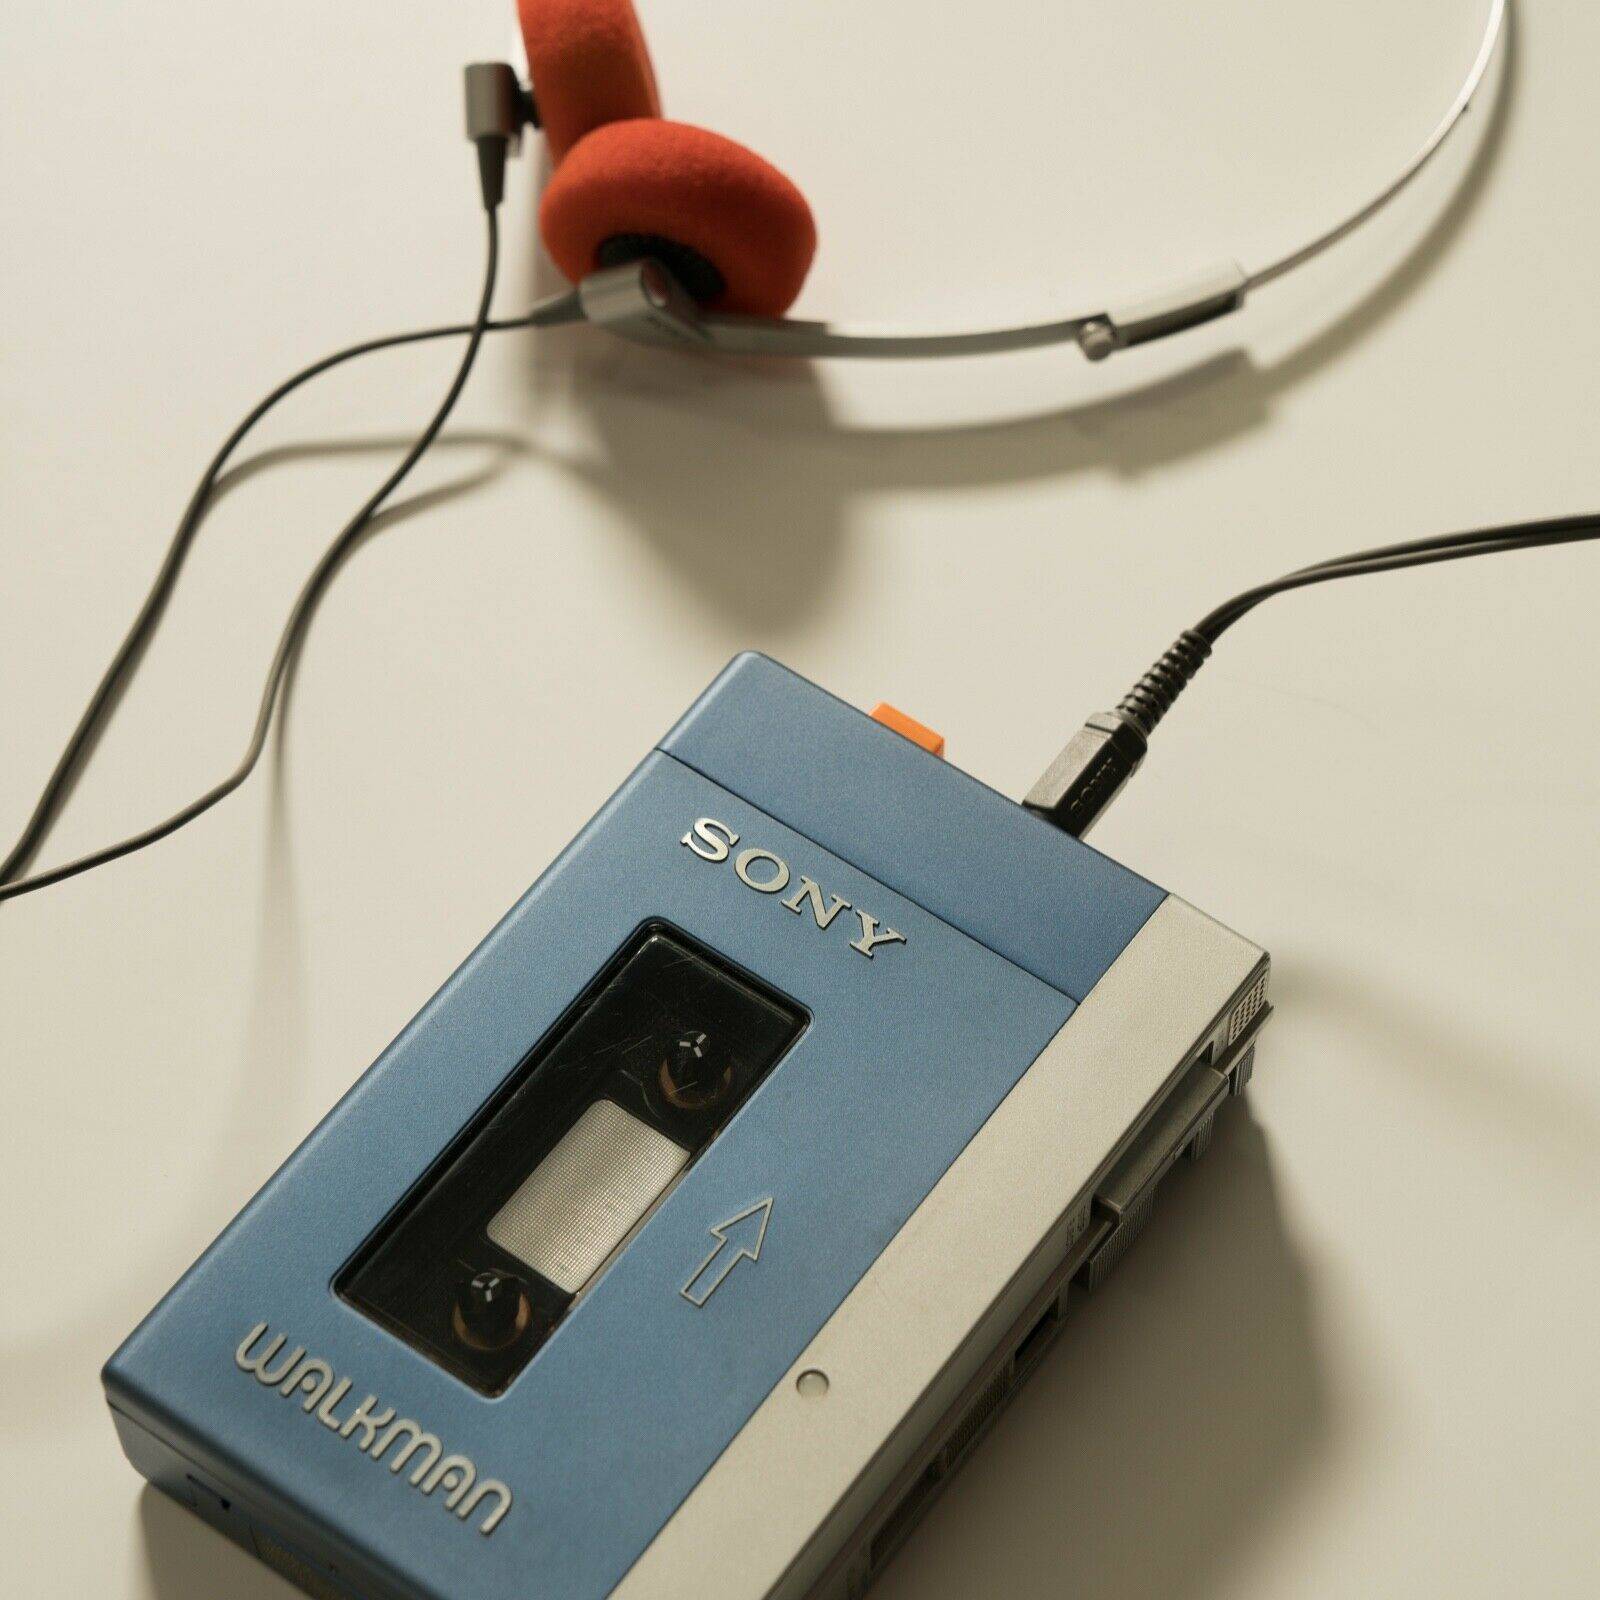 Walkman antiguo de la marca Sony